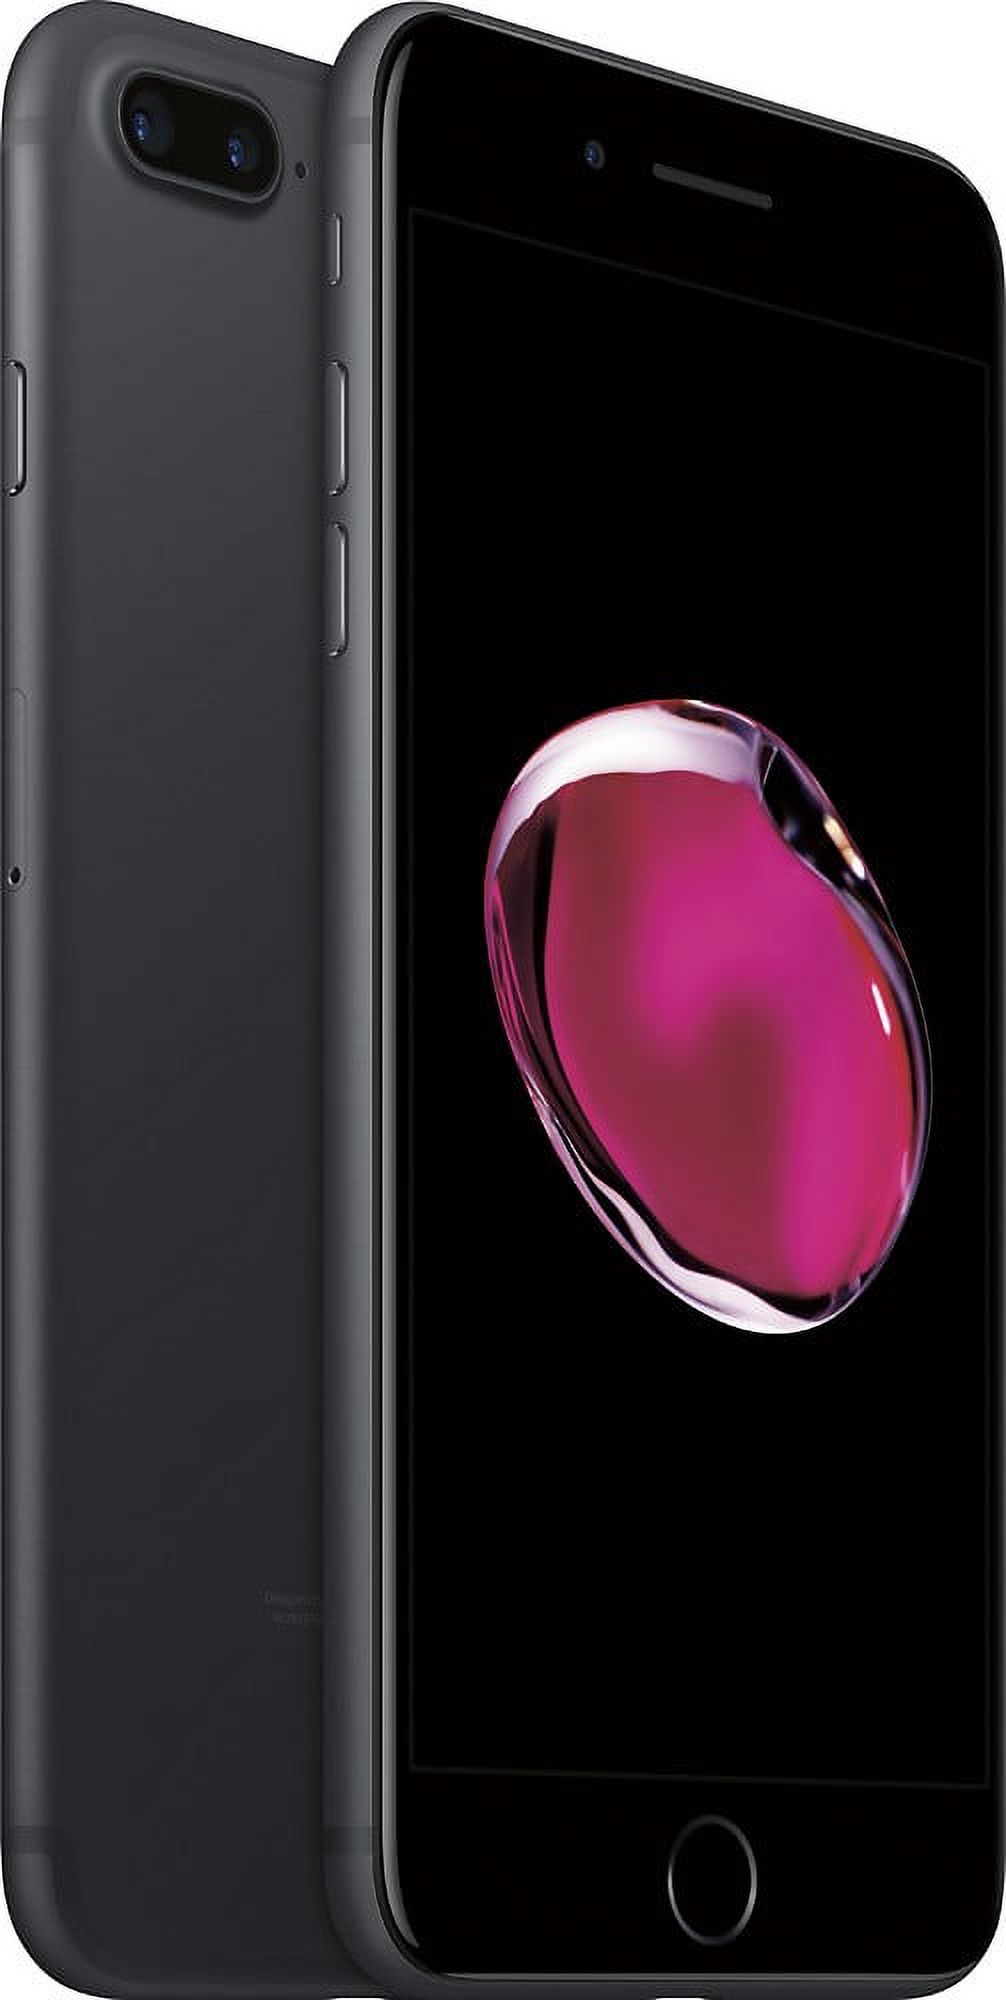 Apple iPhone 7 Plus 32GB Unlocked GSM 4G LTE Quad-Core Smartphone w/ Dual 12MP Camera - Black (Used) - image 3 of 3